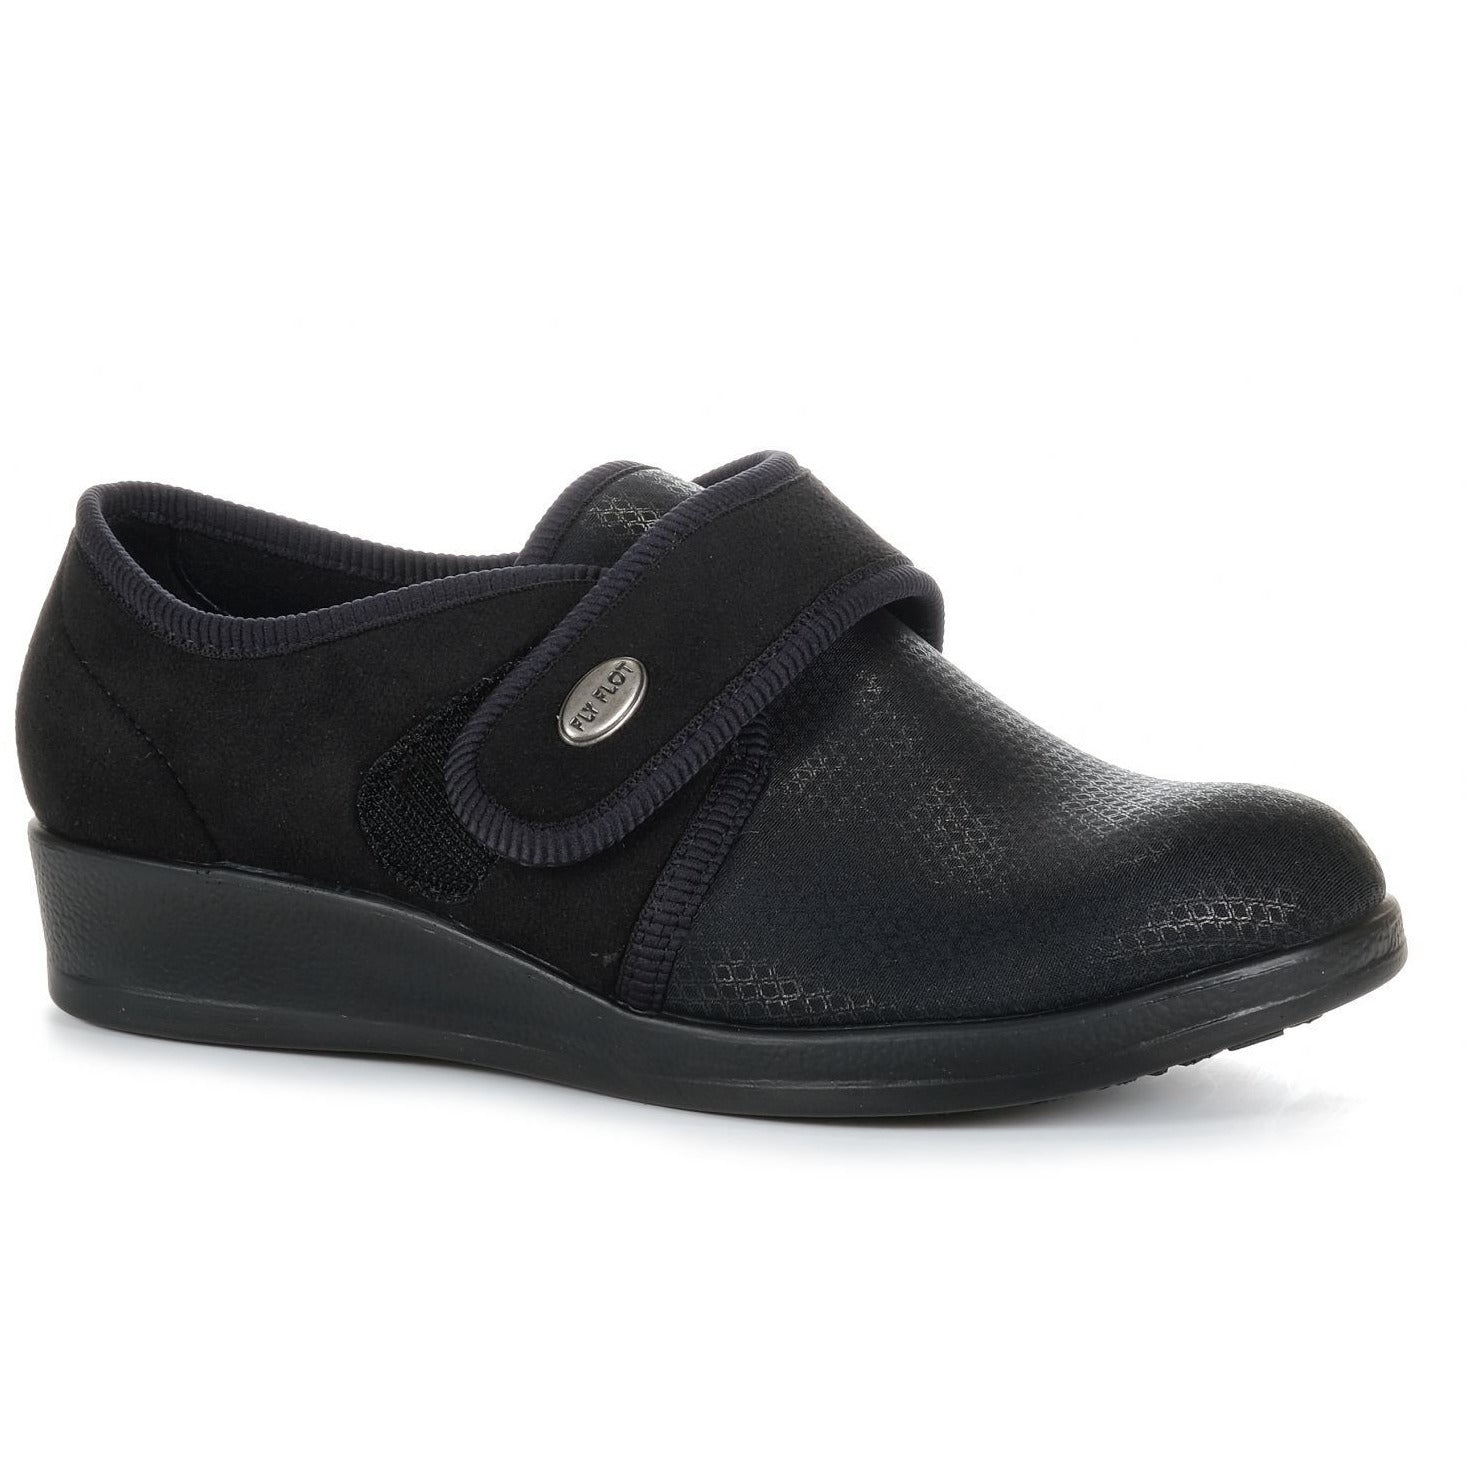 FLY FLOT Shoes Women's 38 Blue Wedge Comfort Clogs... - Depop